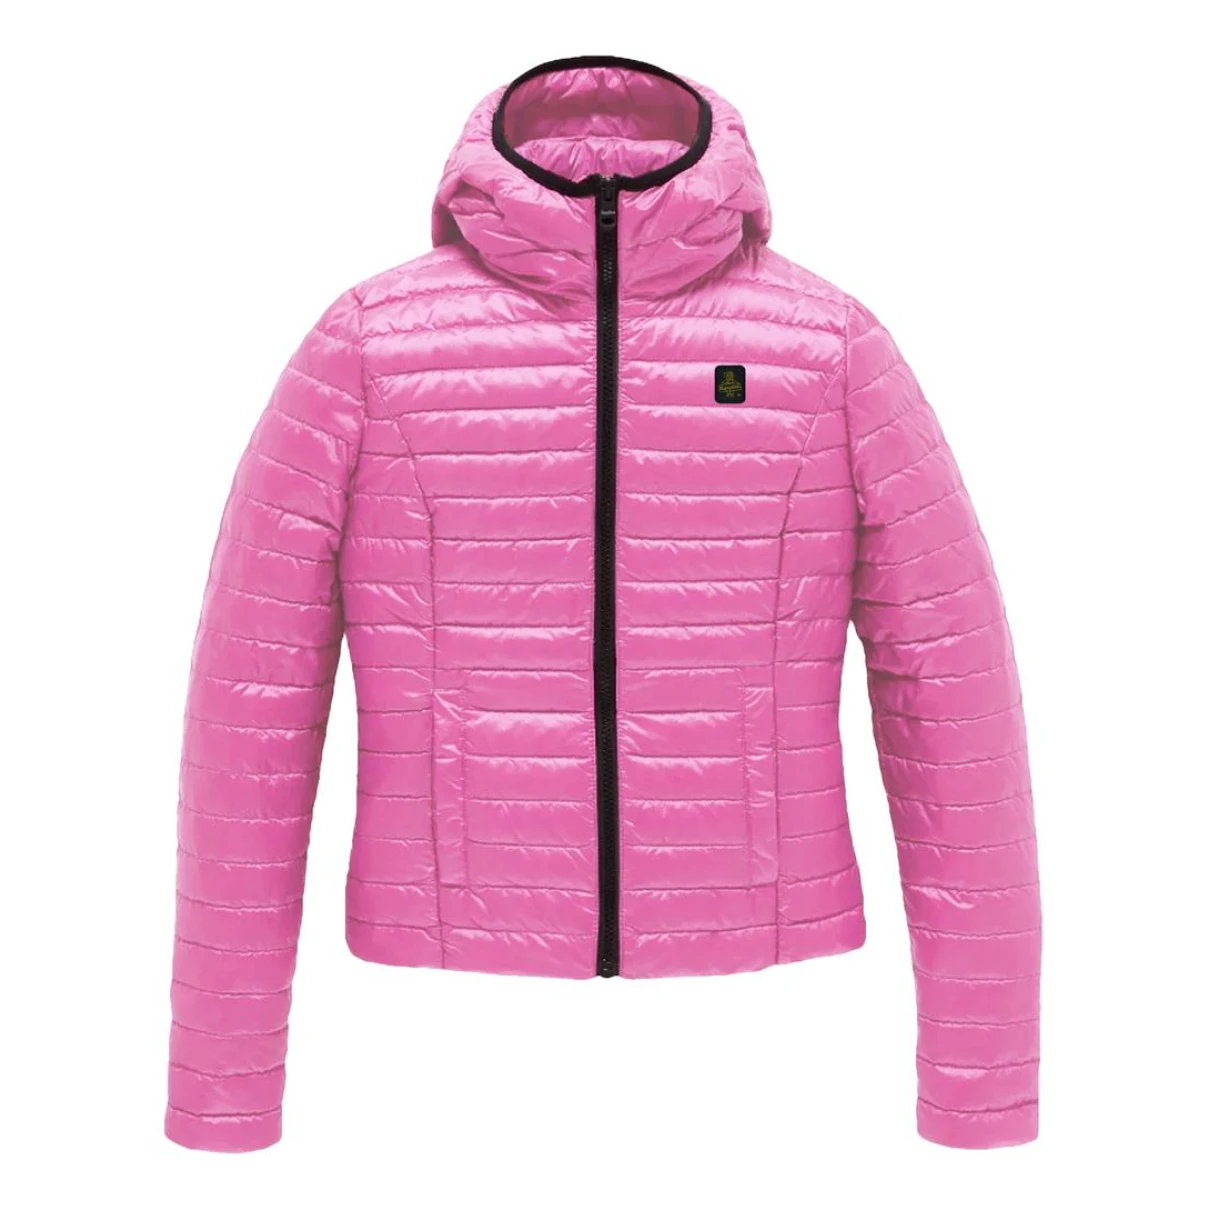 Pre-owned Refrigiwear Jacket In Pink